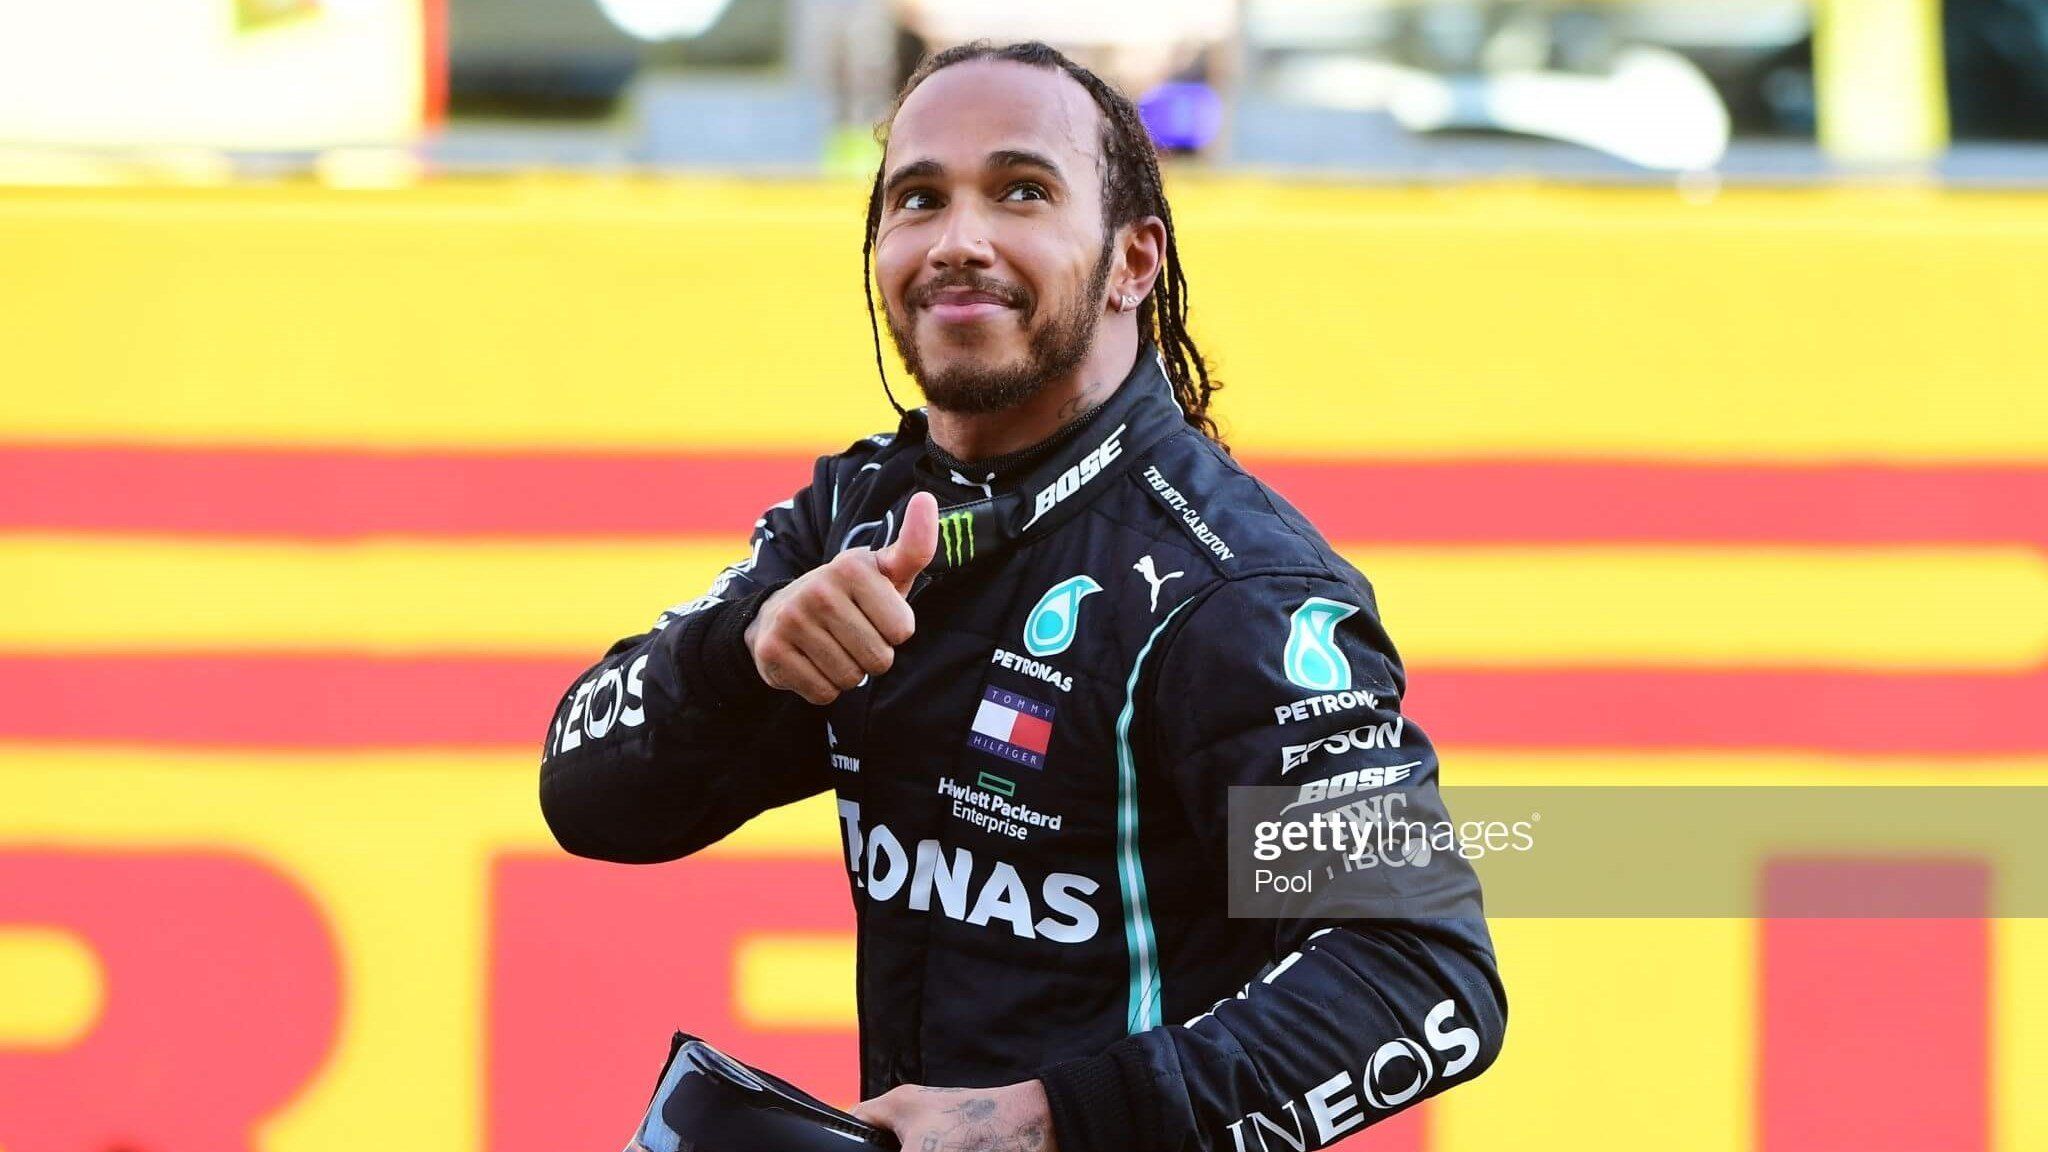 Did Lewis Hamilton Get a Hair Transplant?